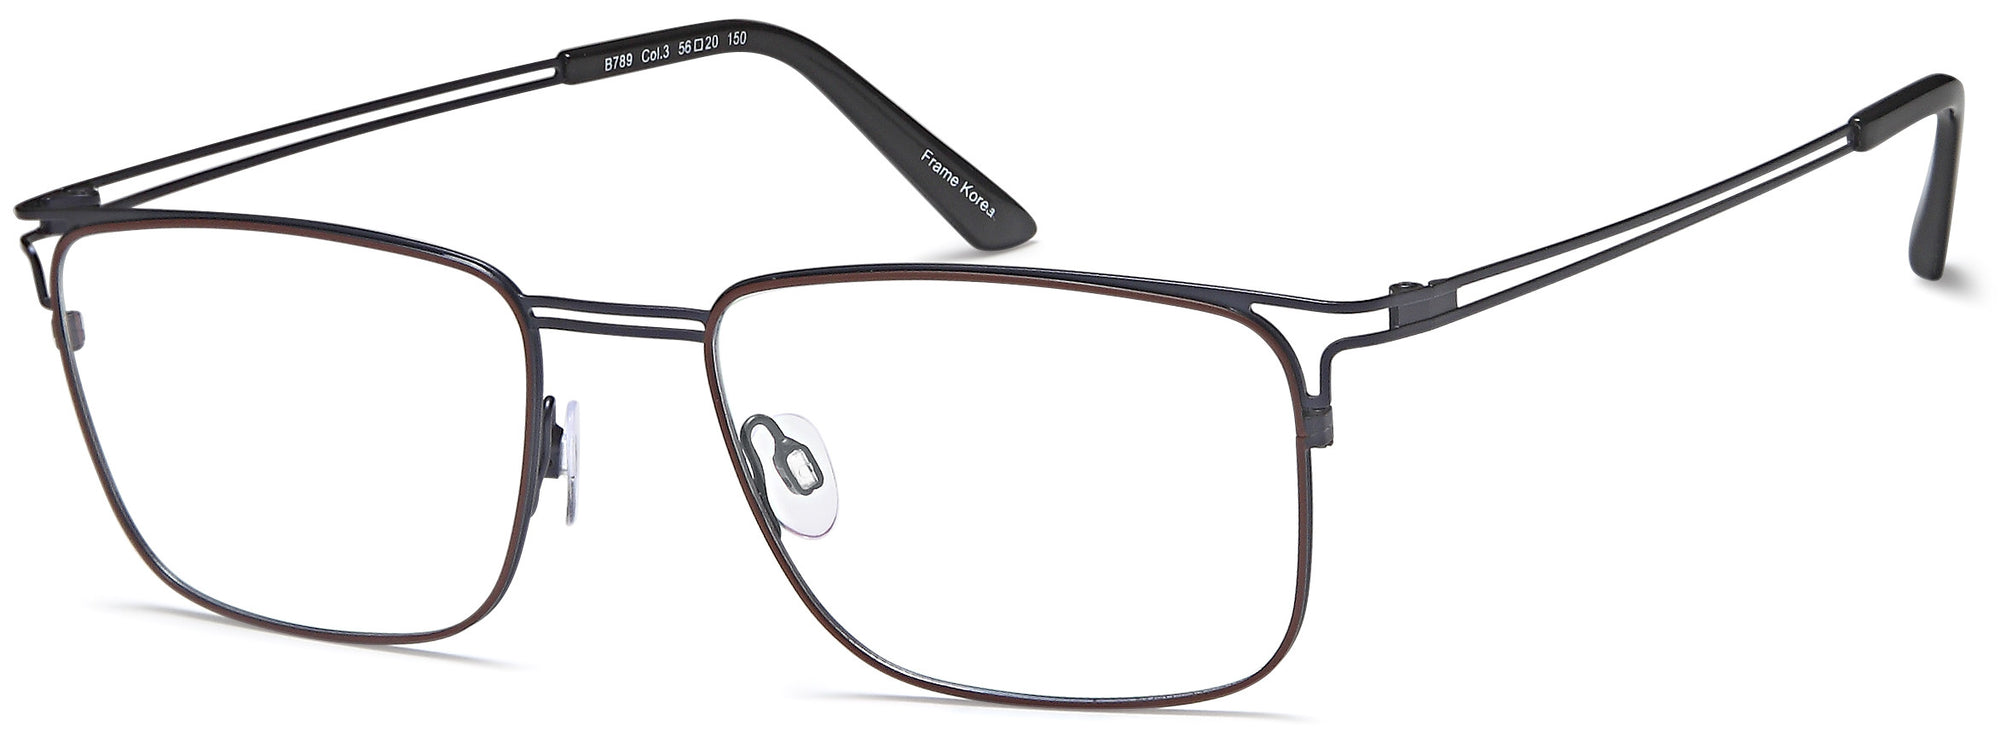 BIGGU Eyeglasses B789 - Go-Readers.com